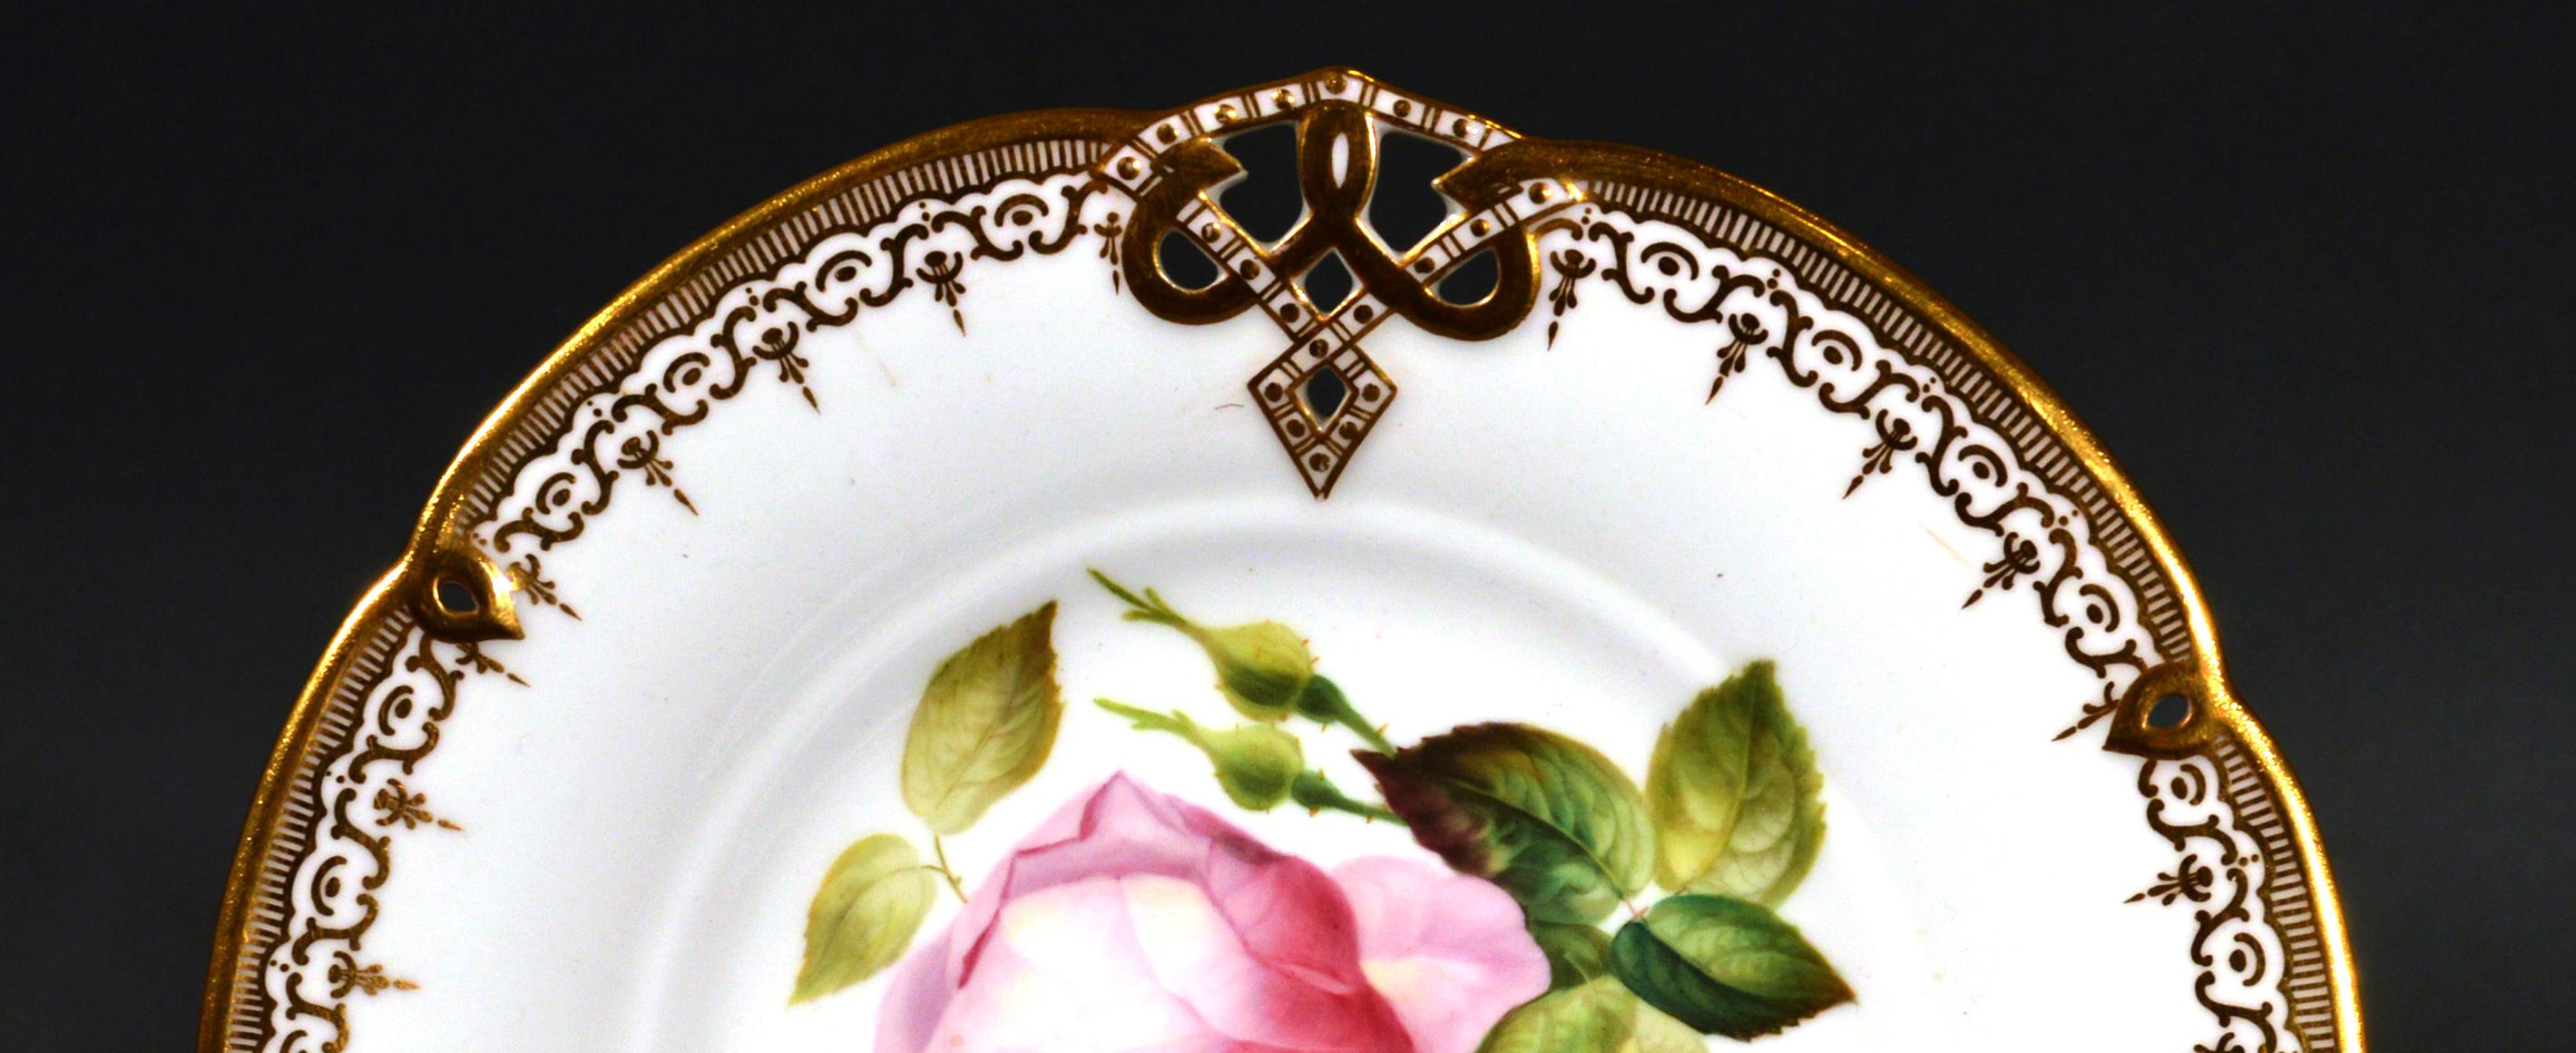 rose china plates